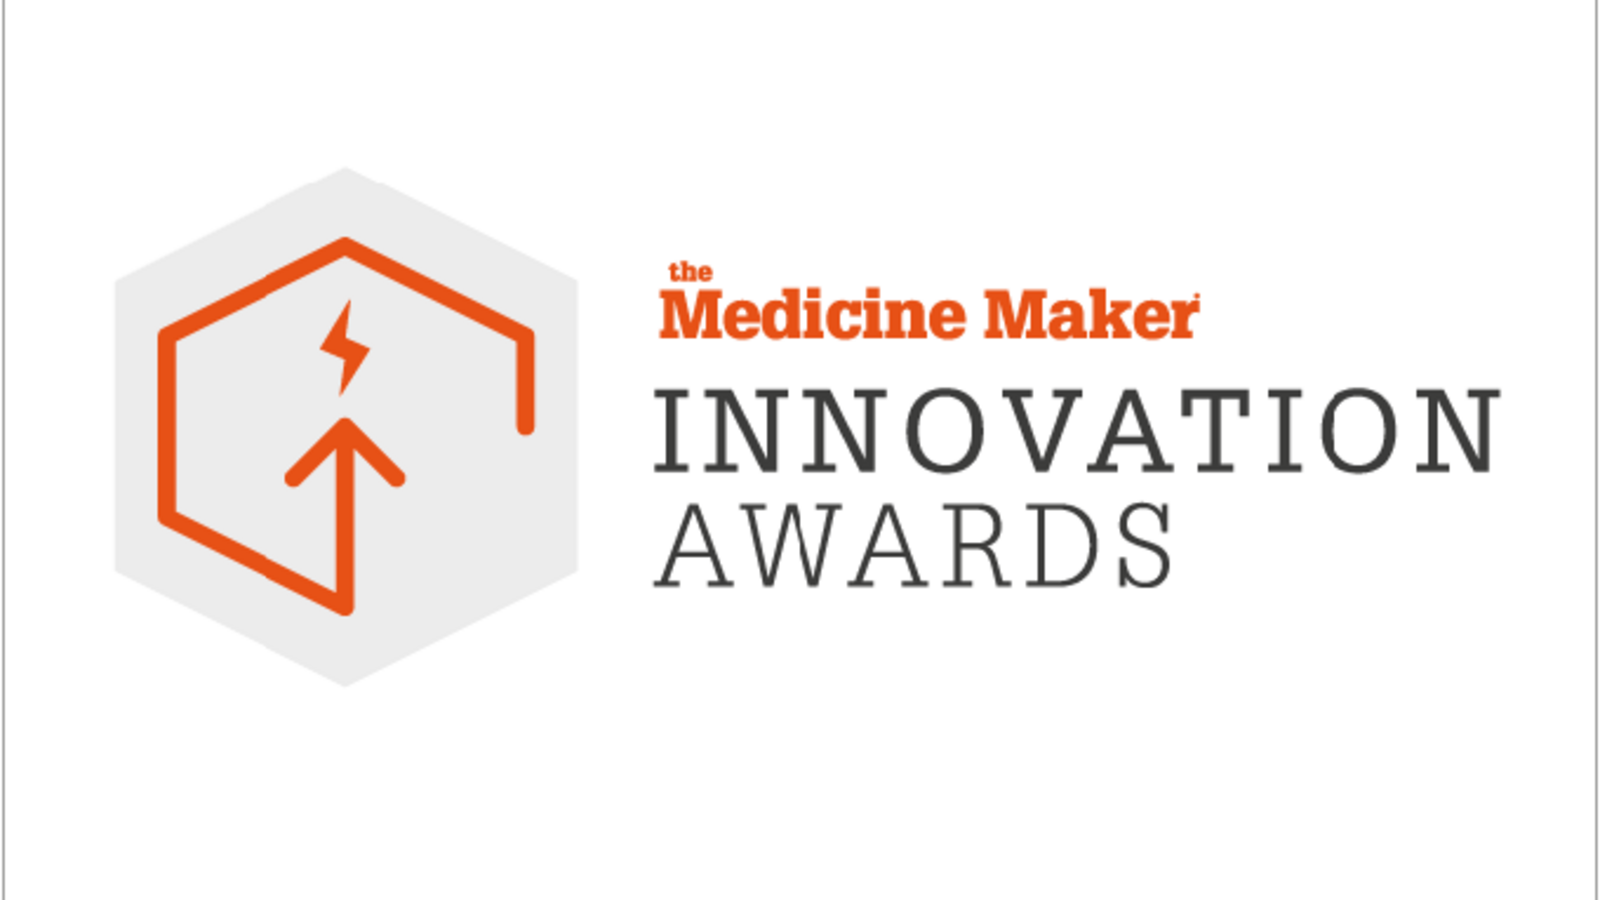 Nominations Open for The Medicine Maker 2021 Innovation Awards